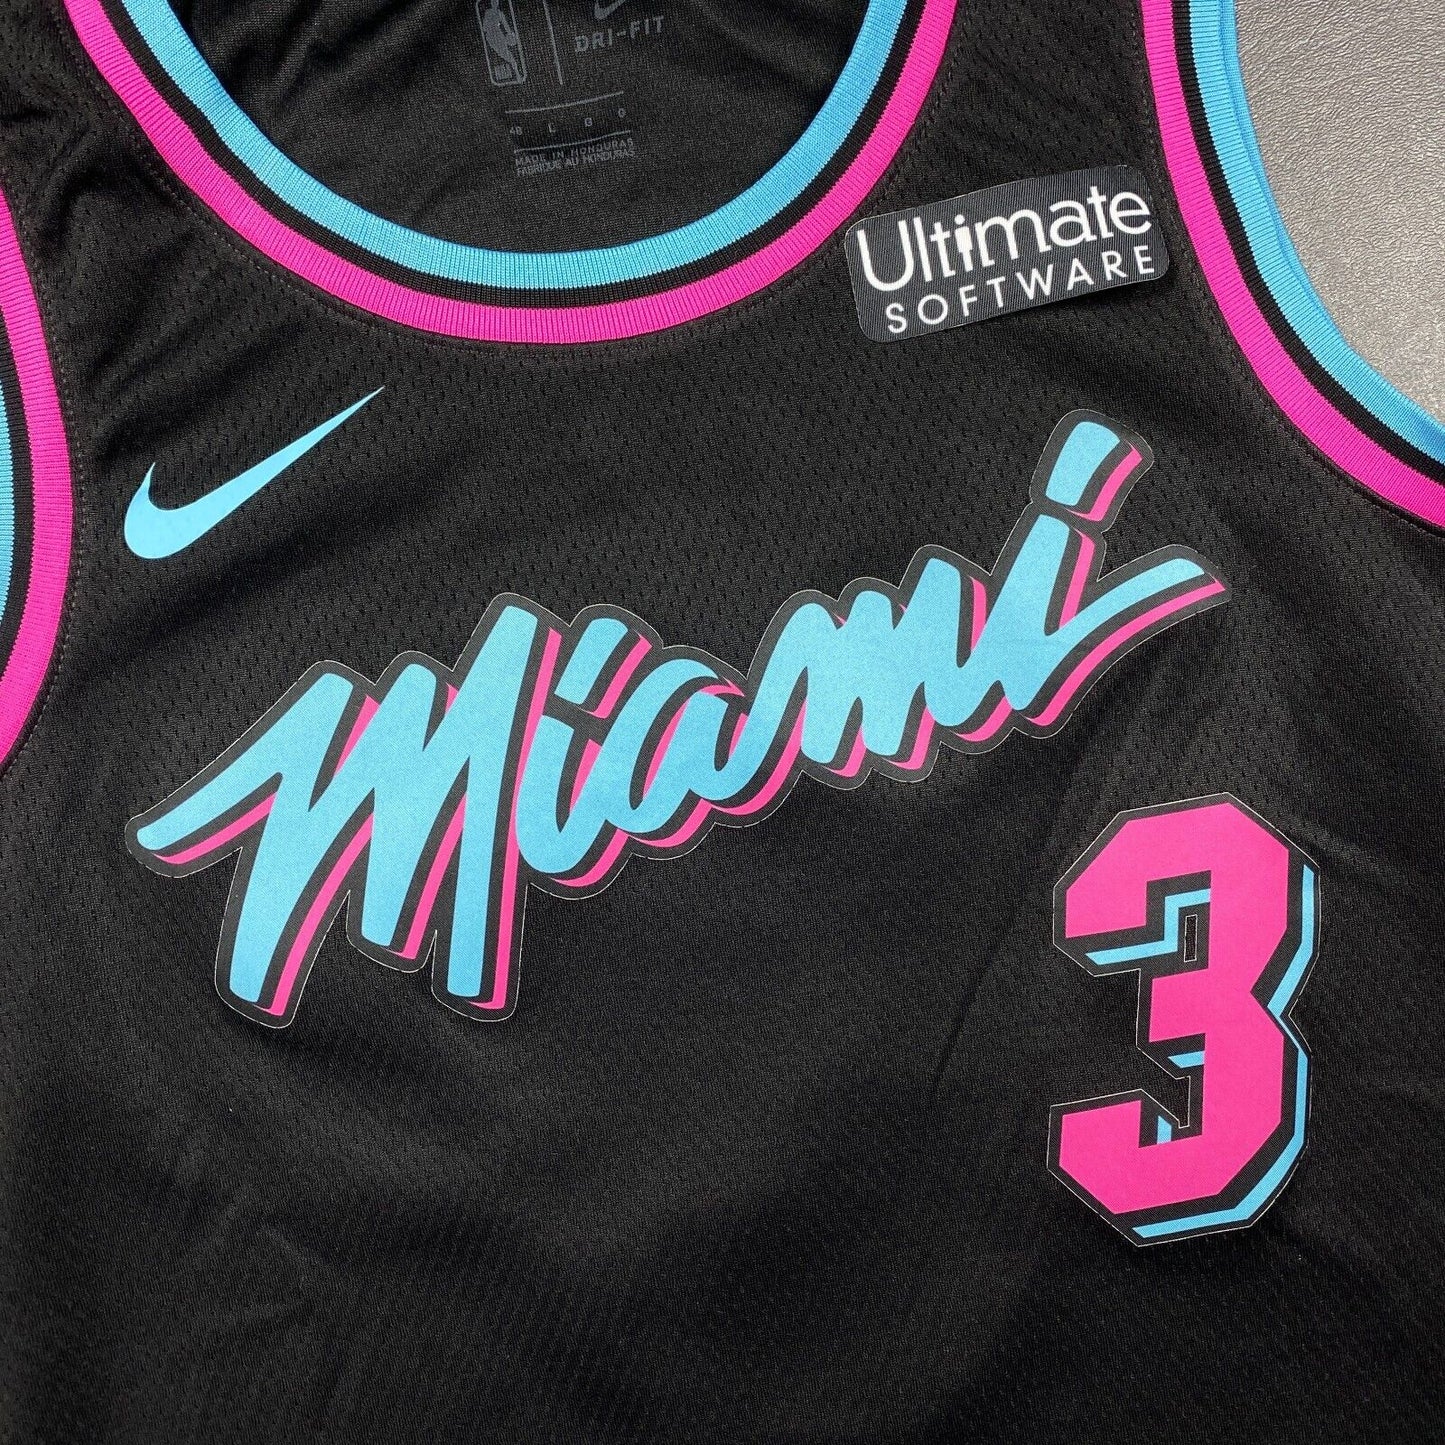 100% Authentic Dwyane Wade Nike Miami Heat Vice City Jersey Size 48 L Mens